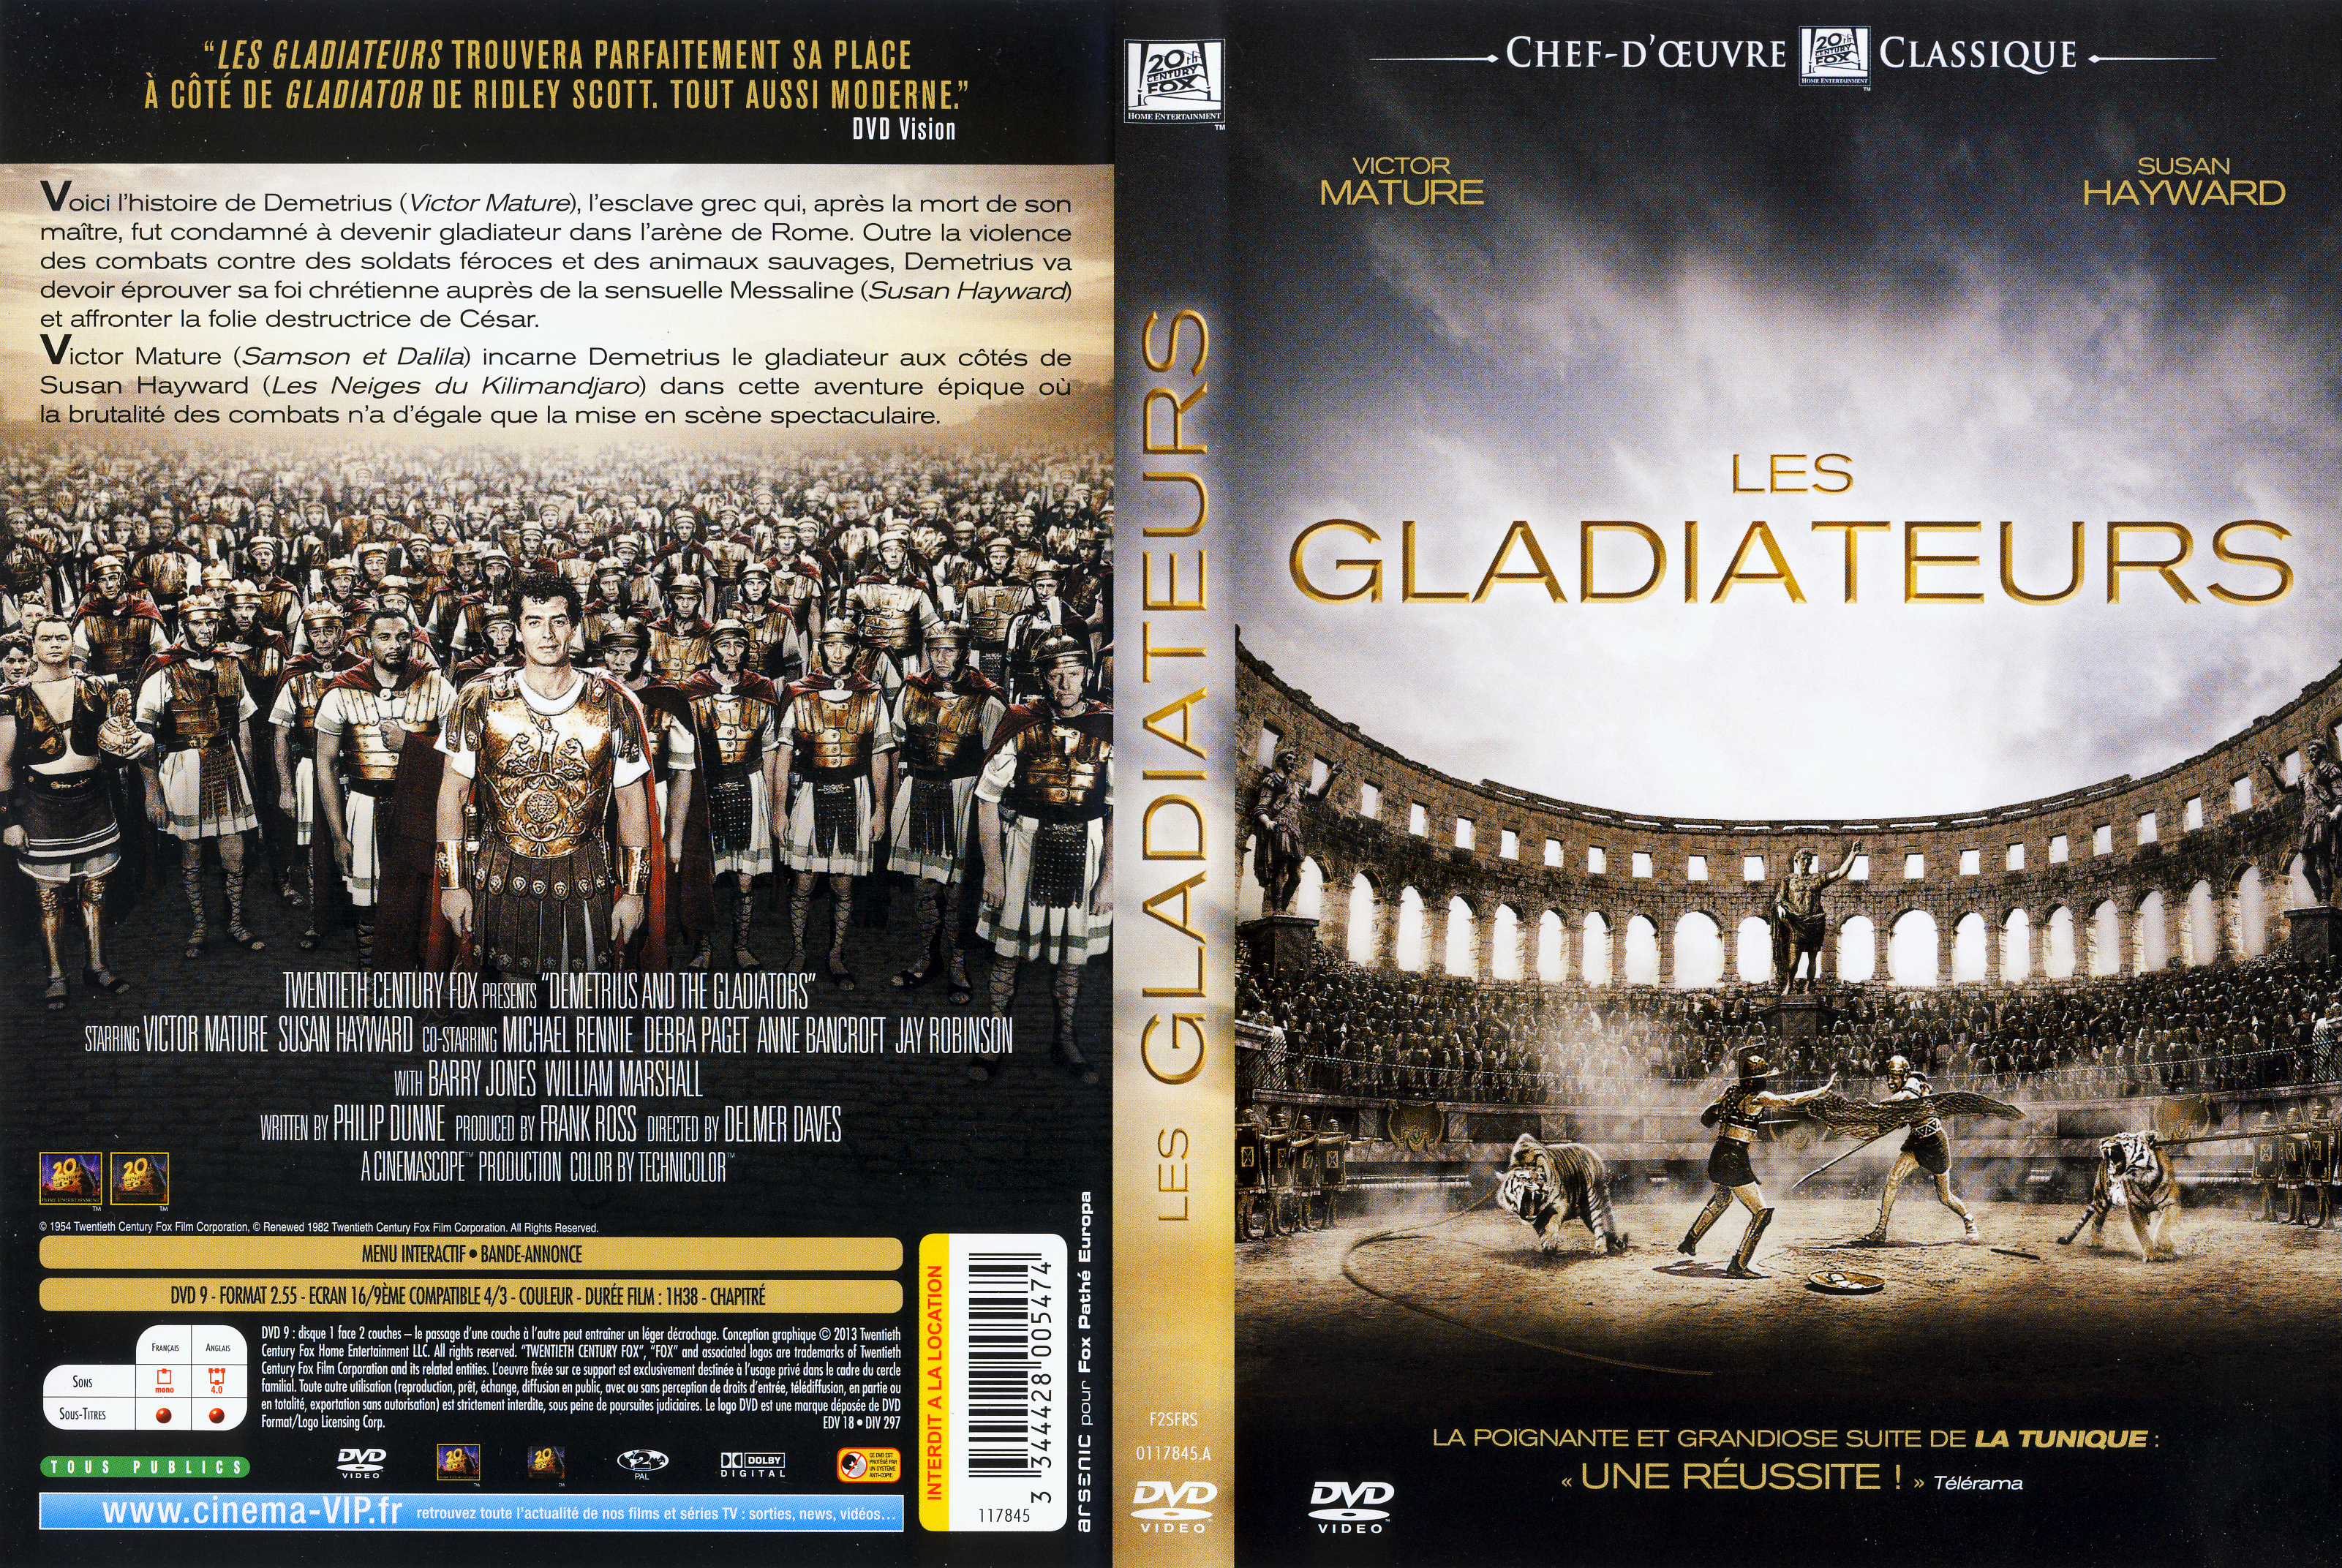 Jaquette DVD Les gladiateurs v3